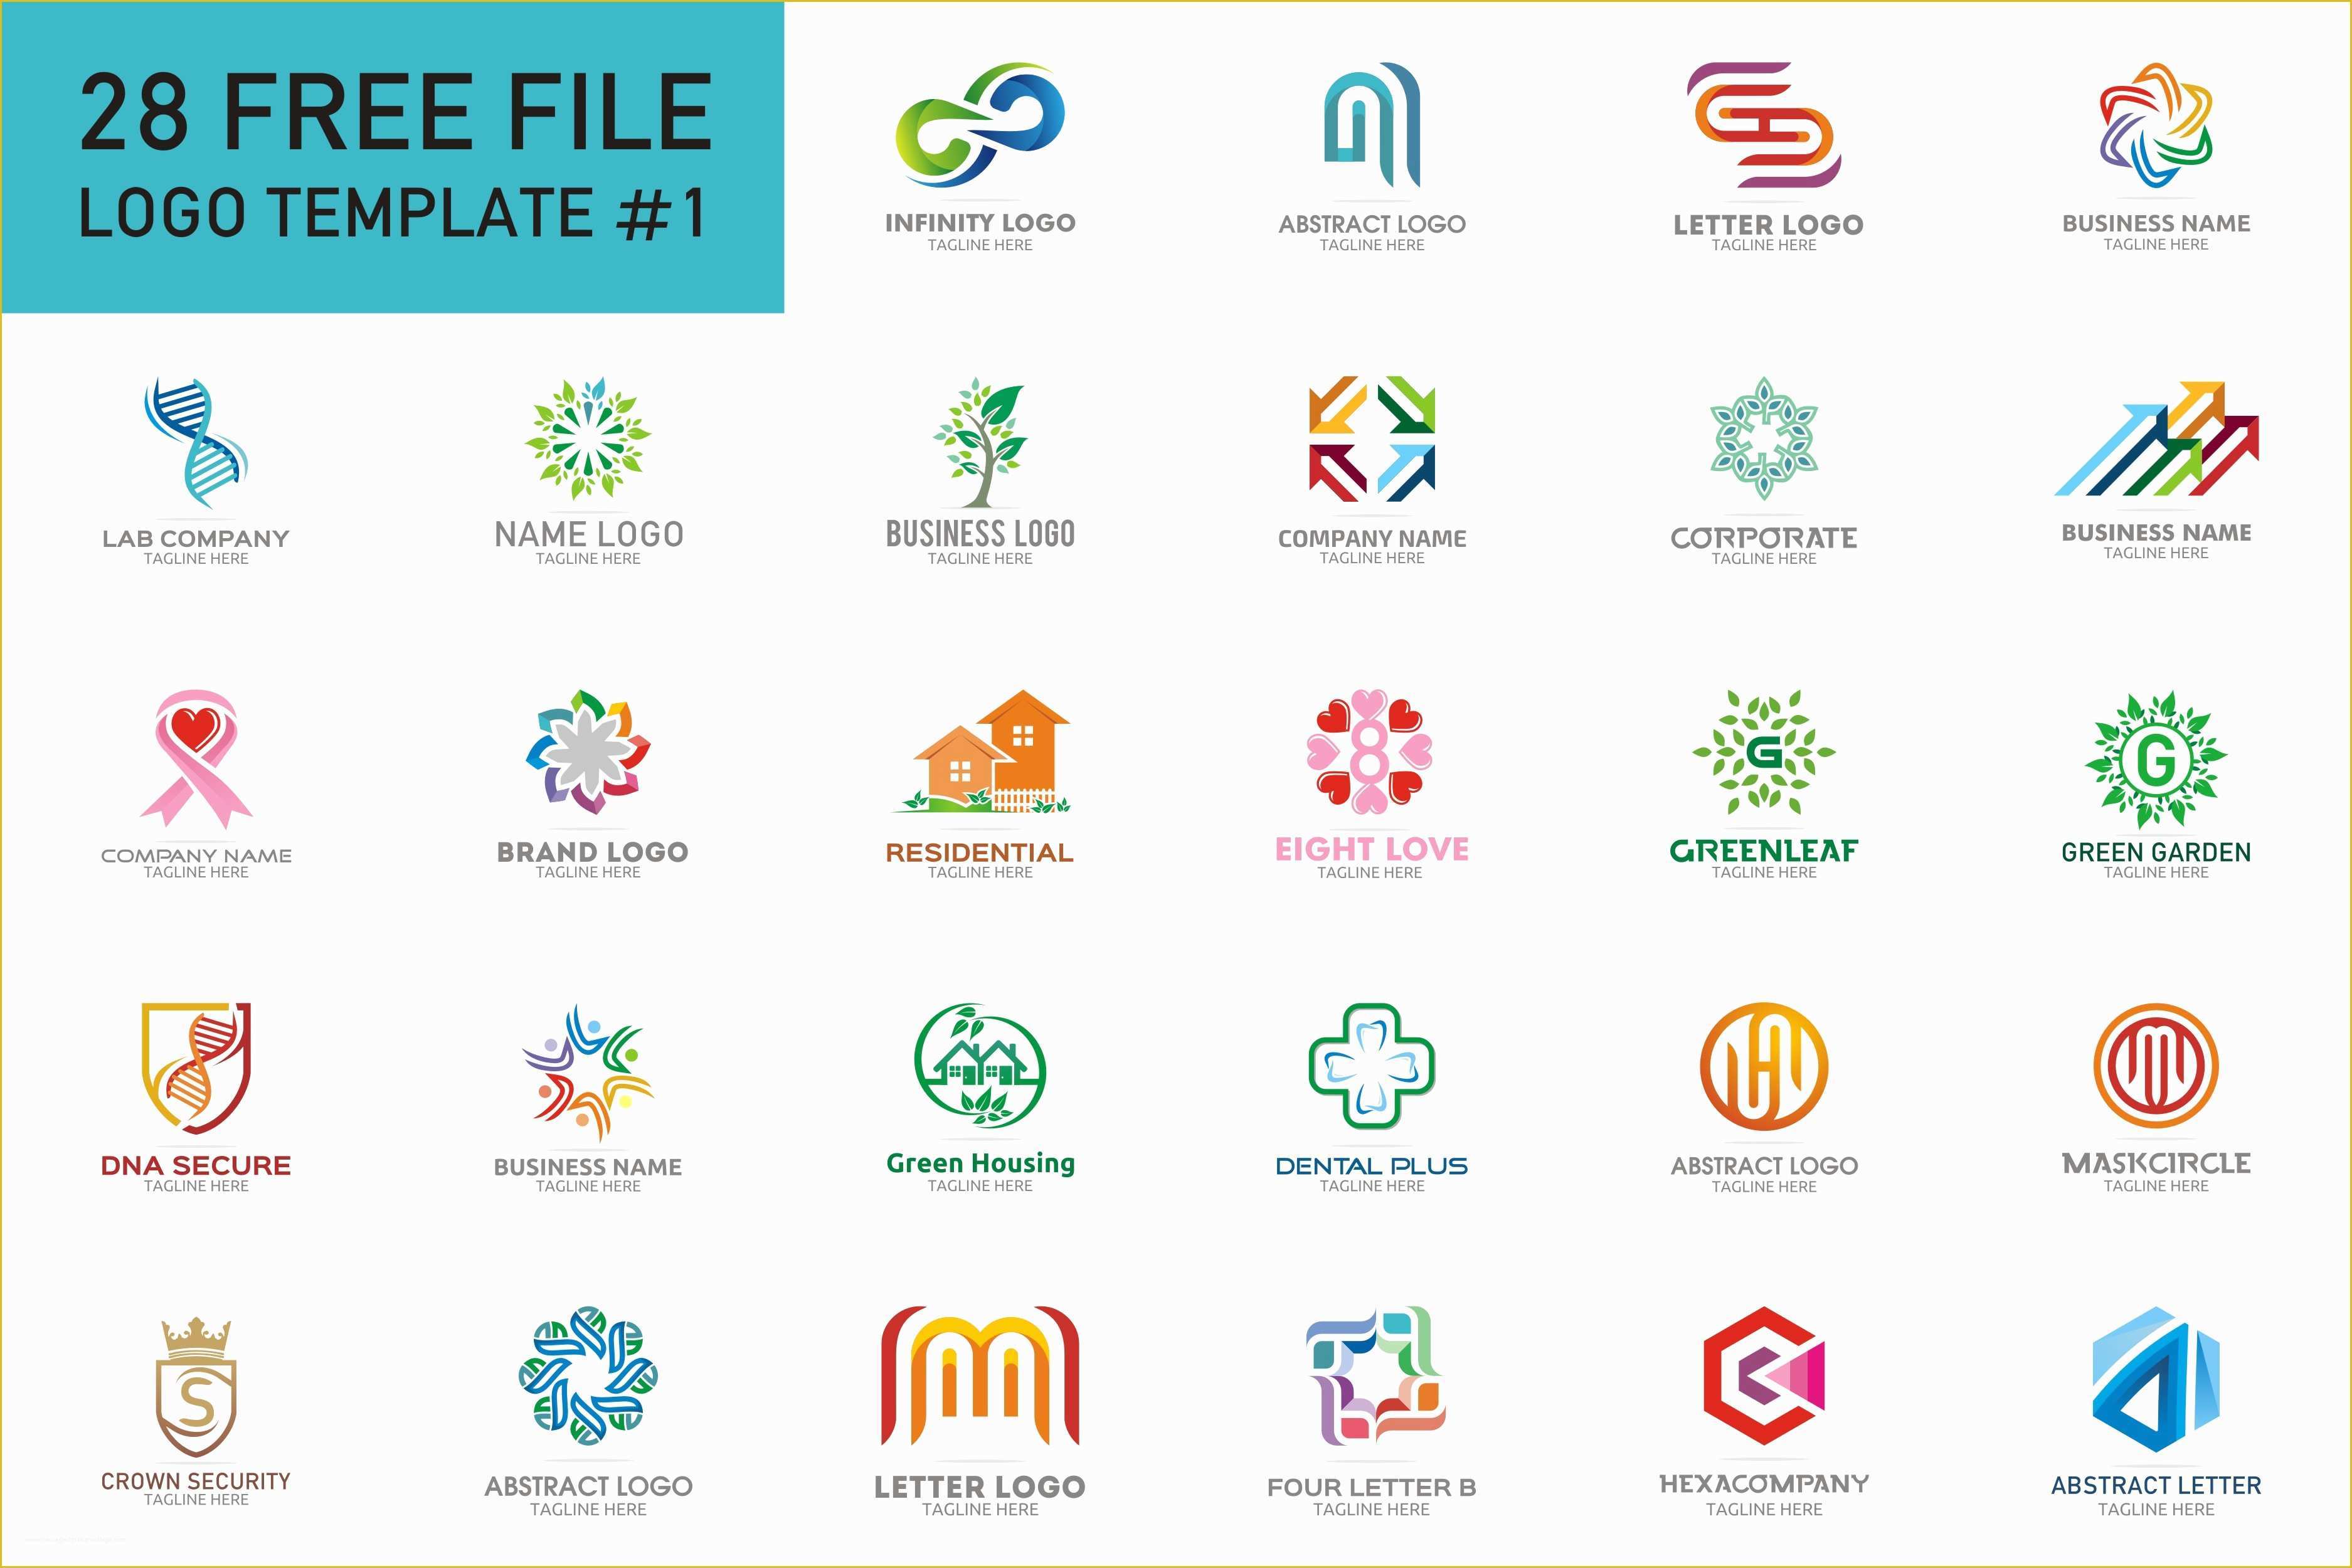 Free Sign Design Templates Of 28 Free Logo Templates – Free Design Resources